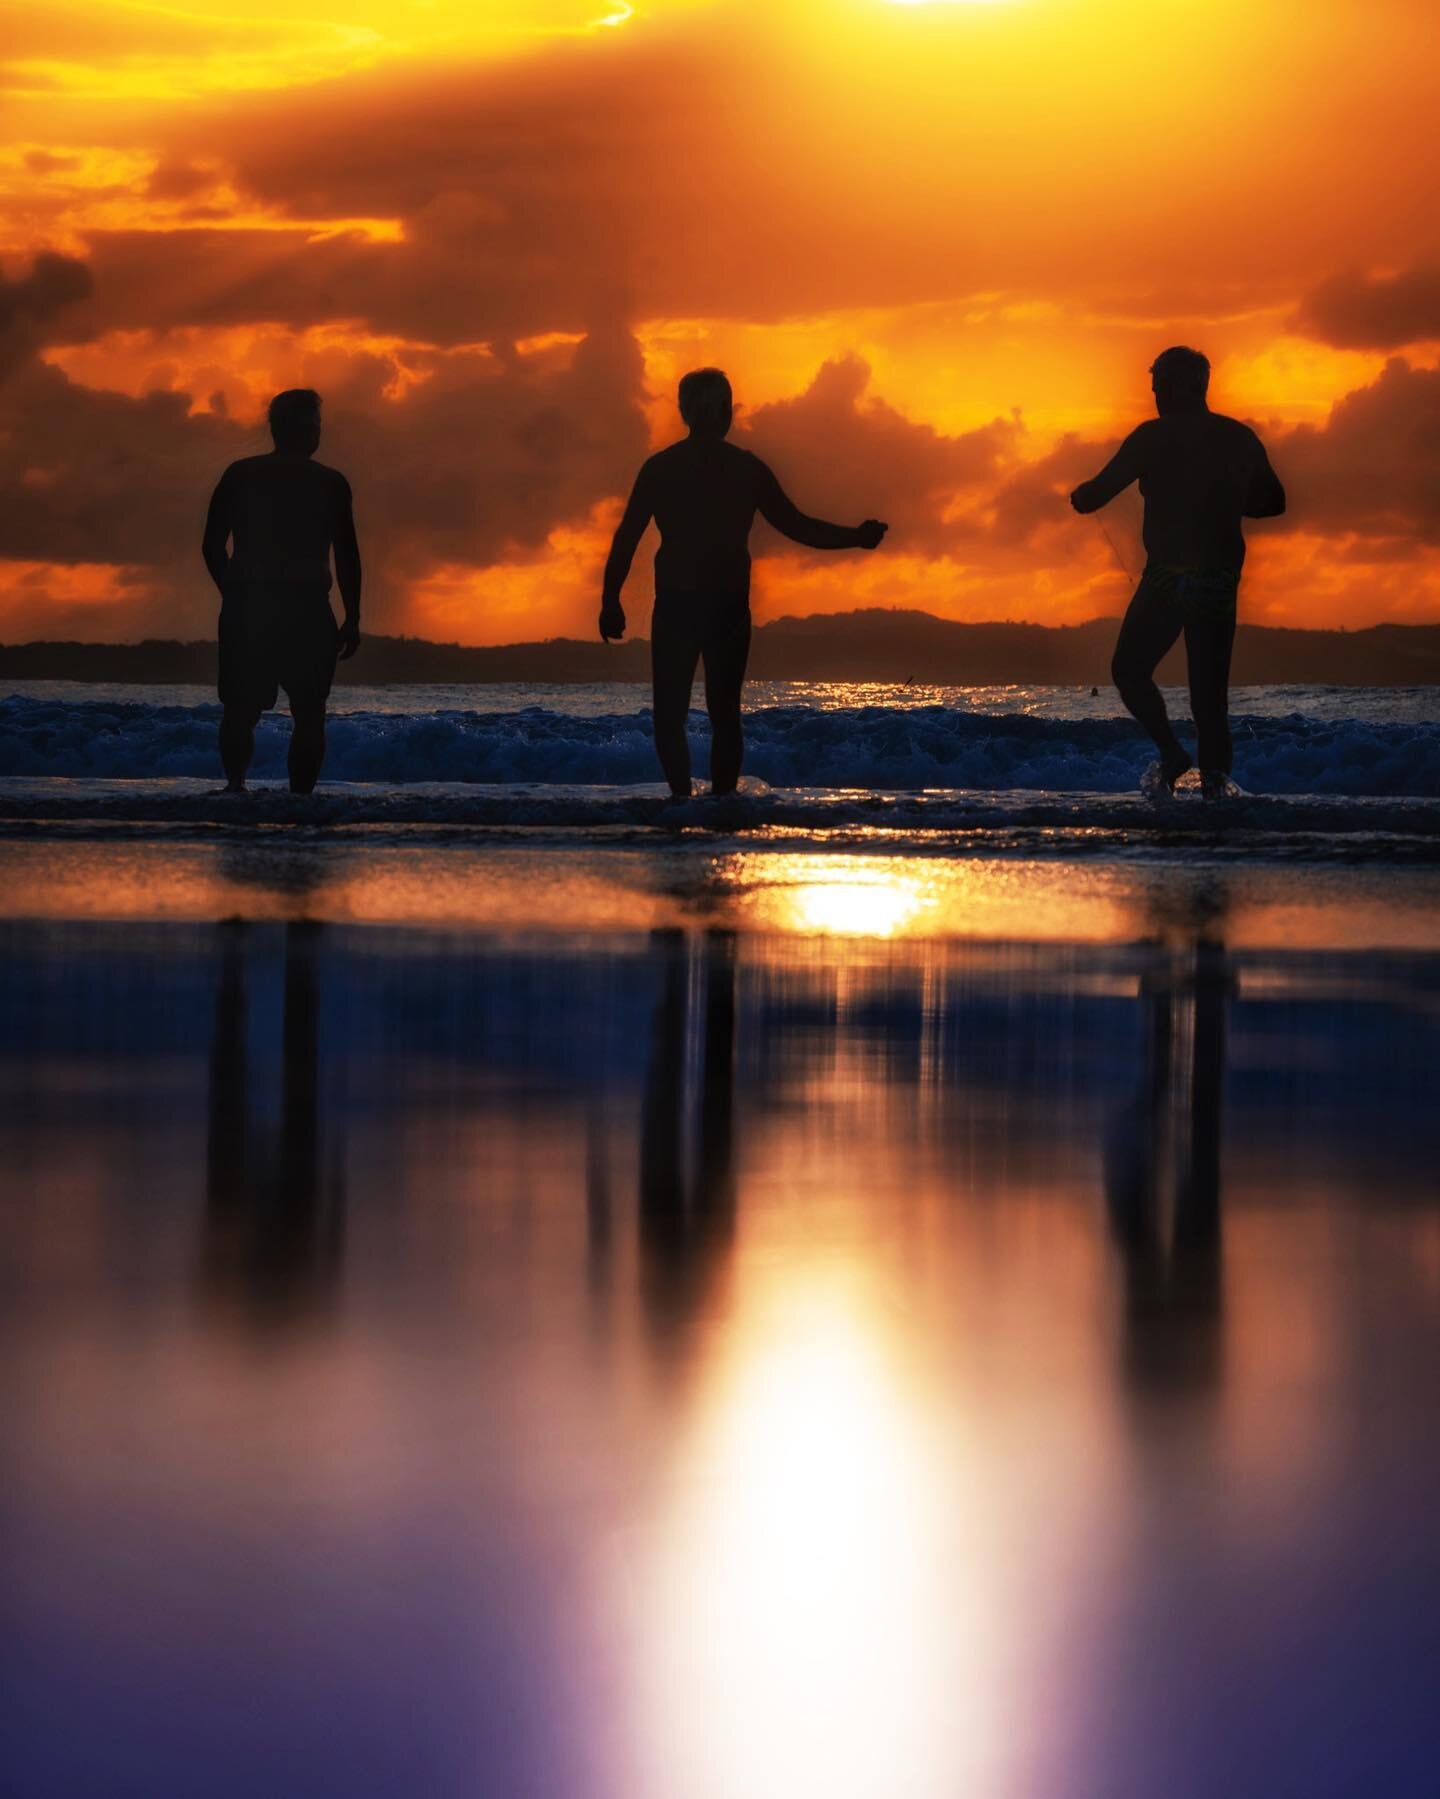 Sunrise 13th May 2023
- Unknown Swimmers -
.
#sunrise #cronullabeach #cronulla #beach #silhouette #swimmers